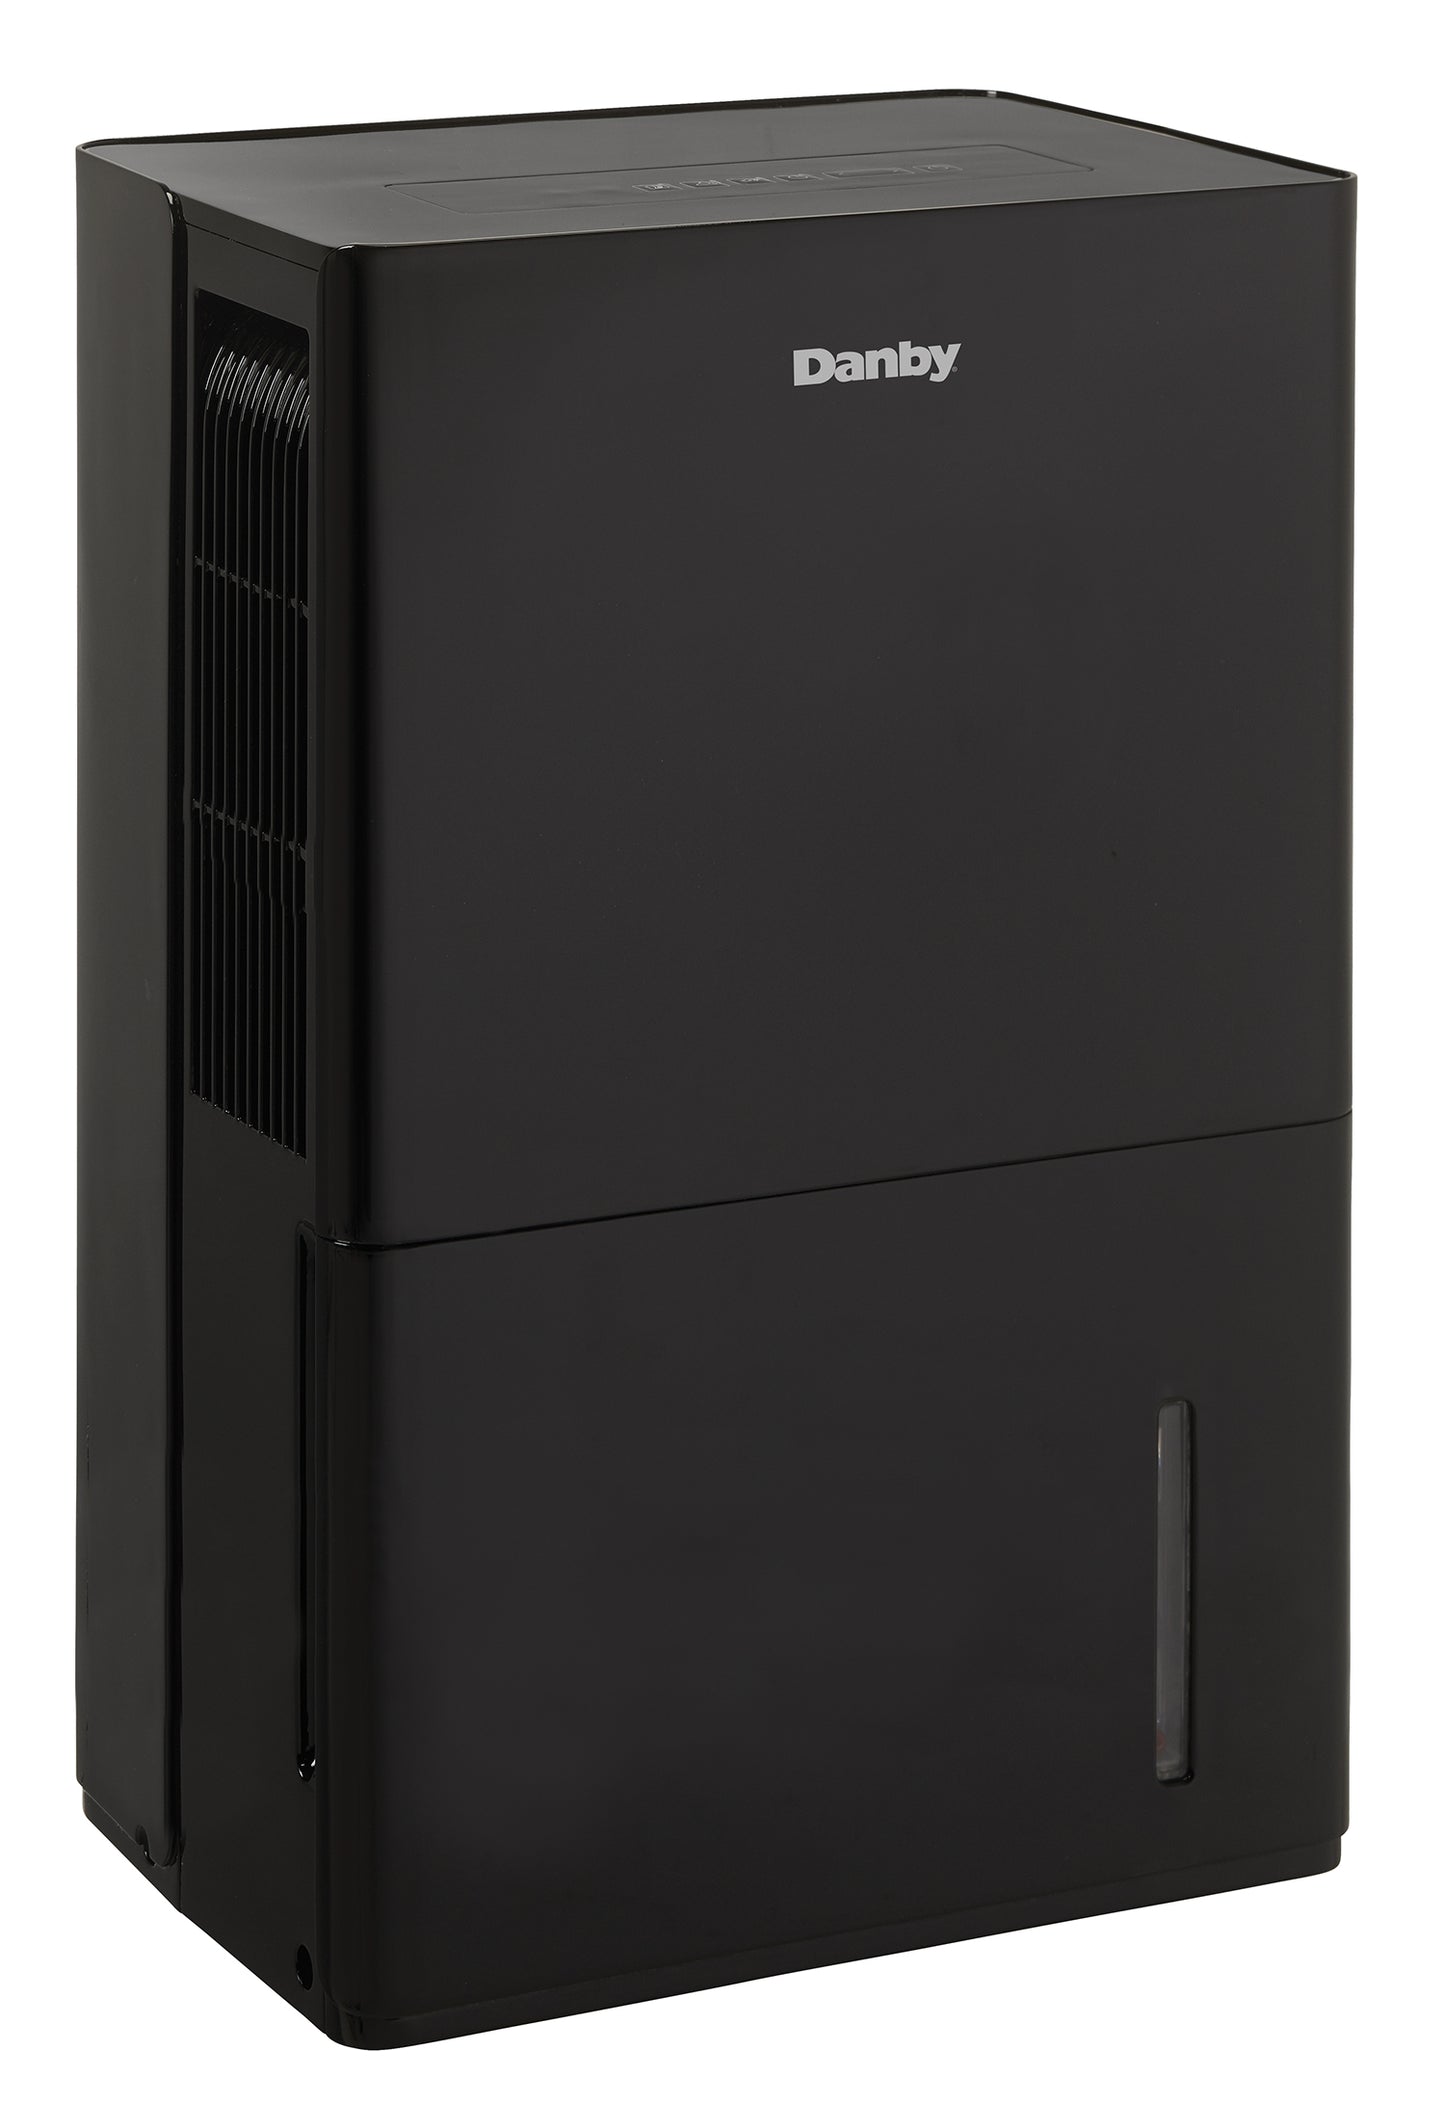 Danby 50 Pint Dehumidifier with Pump - Black - Refurbished*